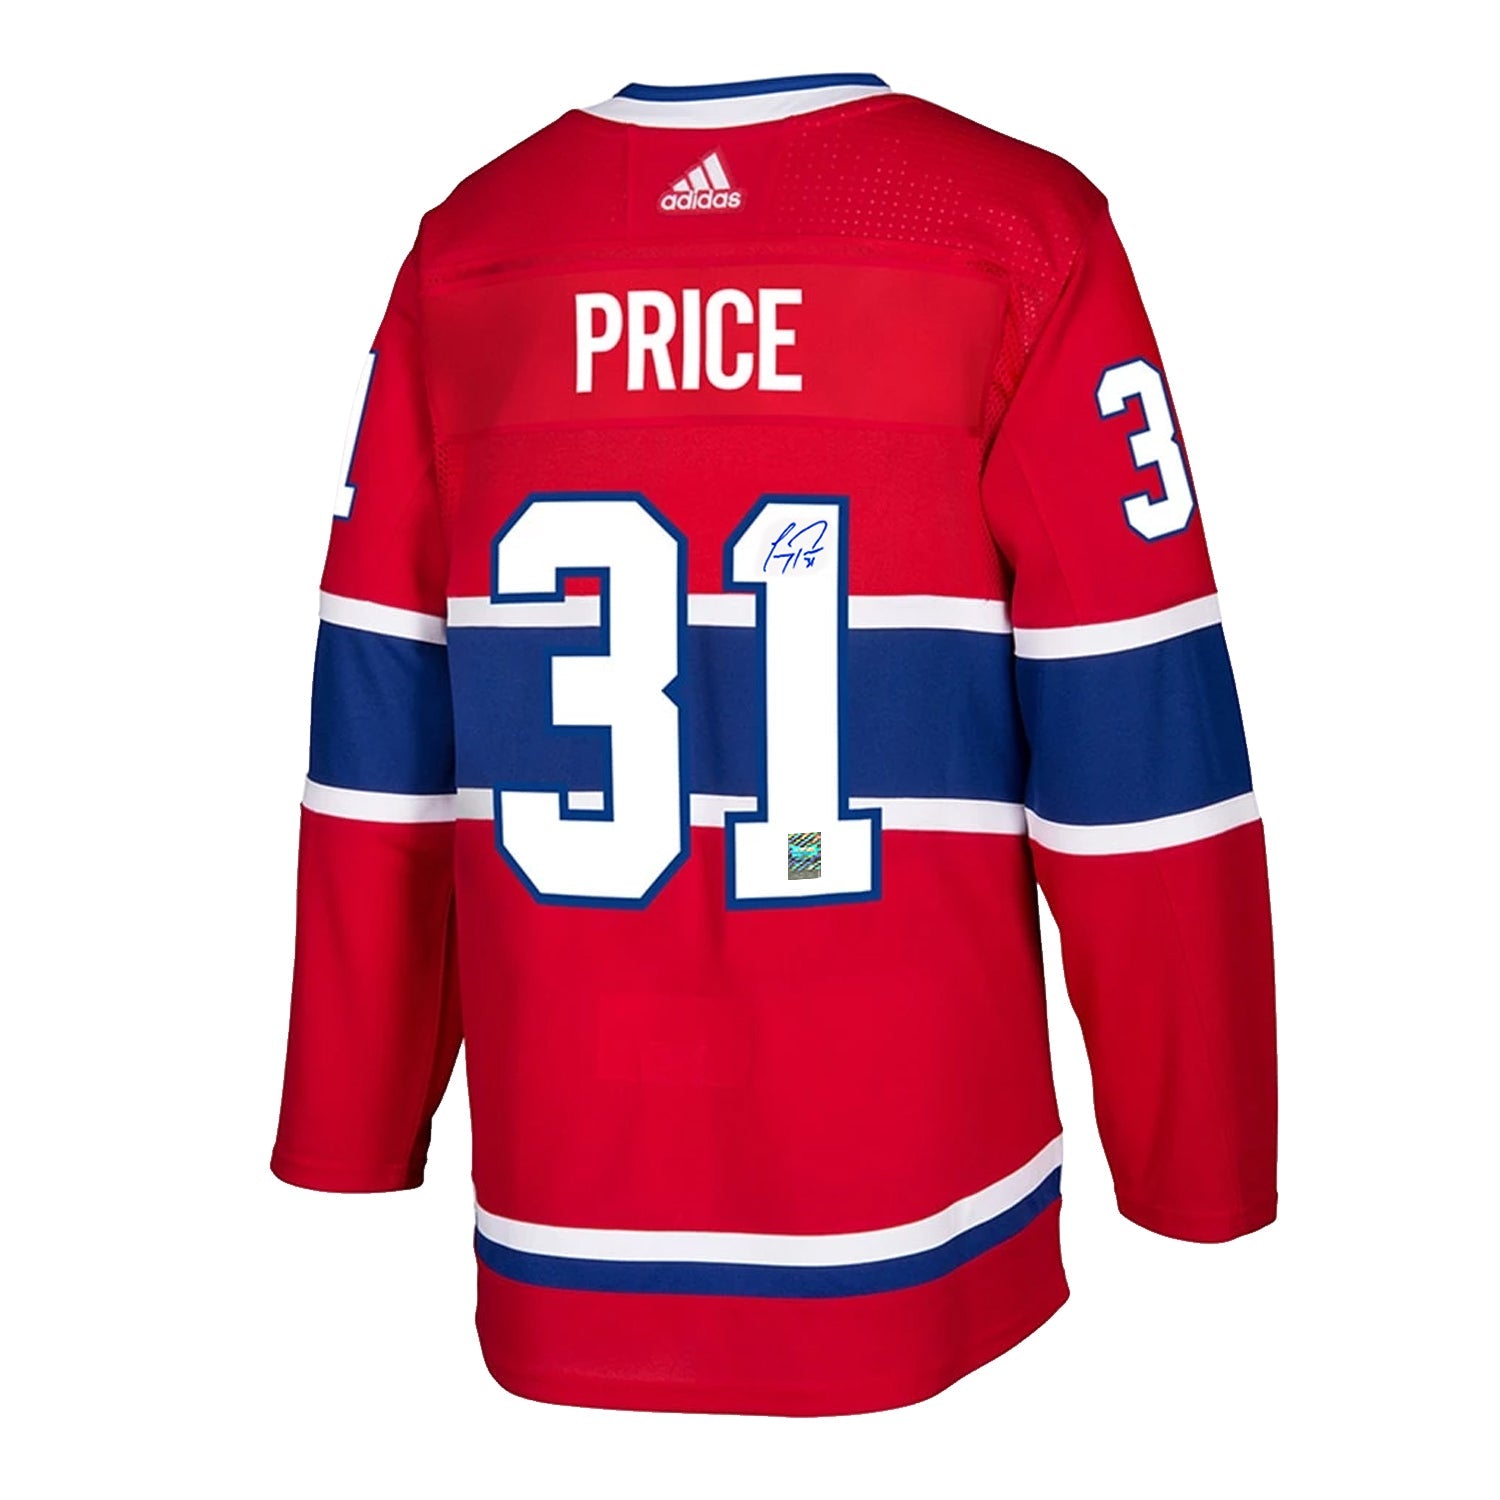 Carey Price Signed Montreal Canadiens Adidas Pro Jersey - Heritage Hockey™